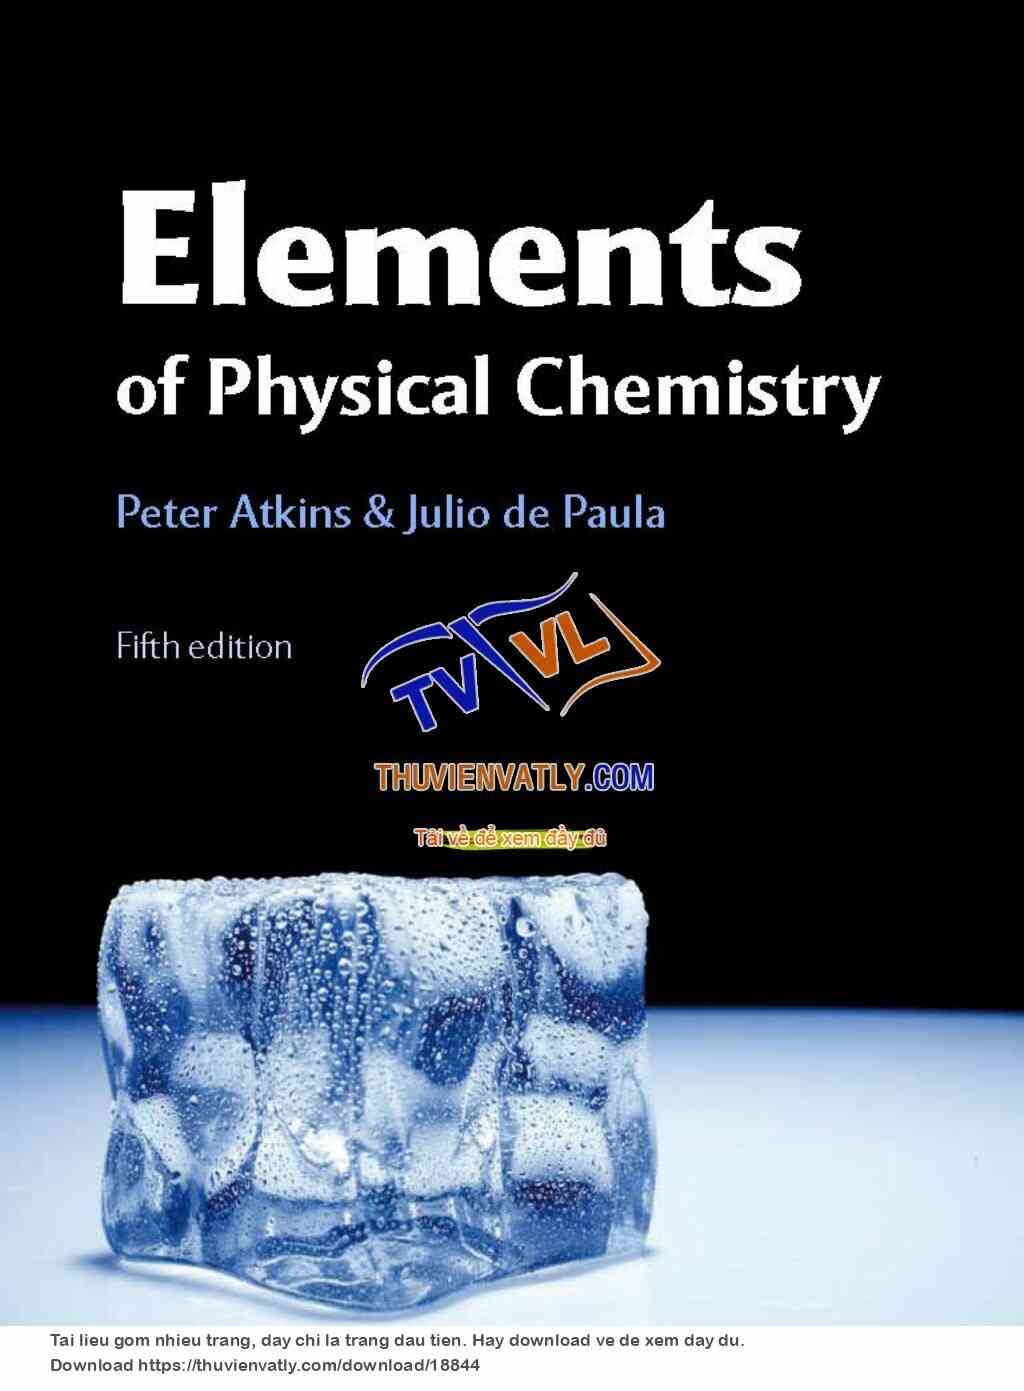 Elements of Physical Chemistry 5th ( Peter Atkins & Julio De Paula, Oxford University Press 2009)